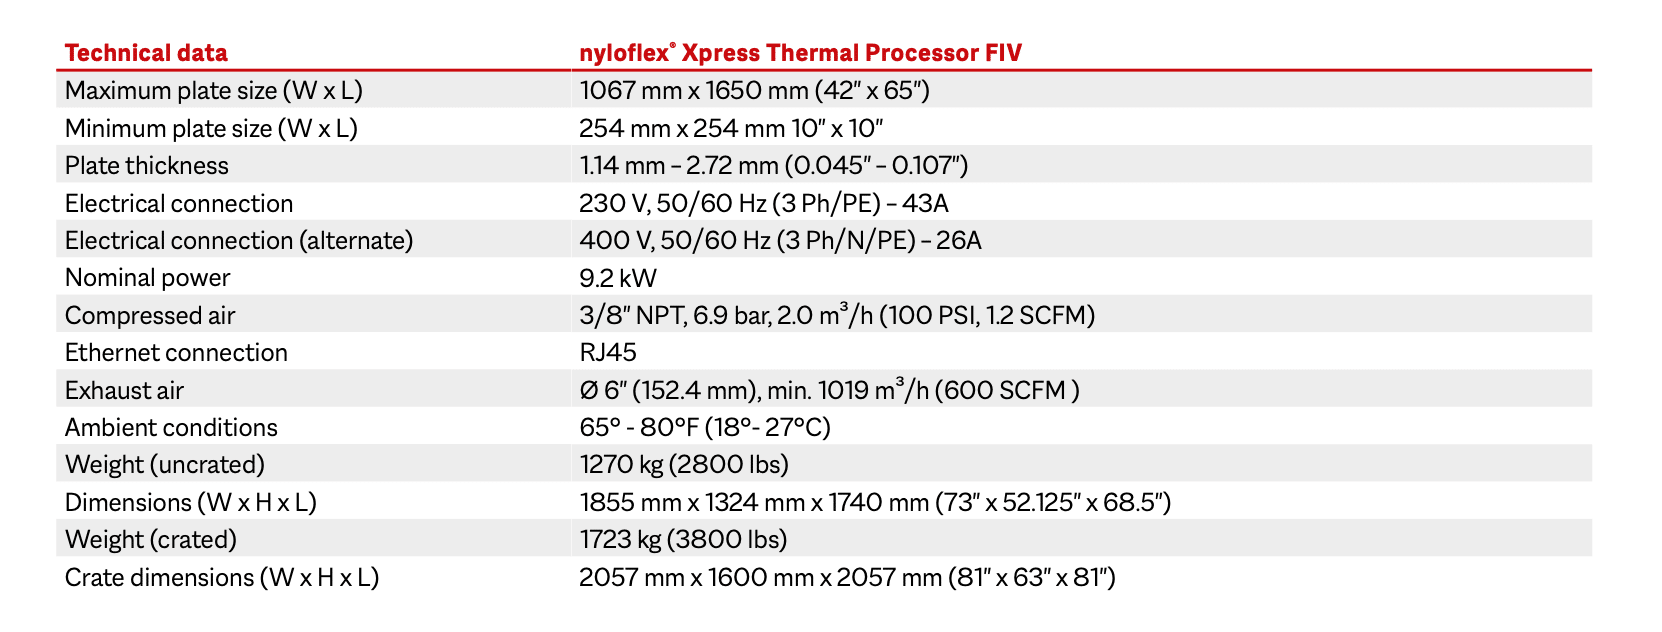 nyloflex thermal technical data